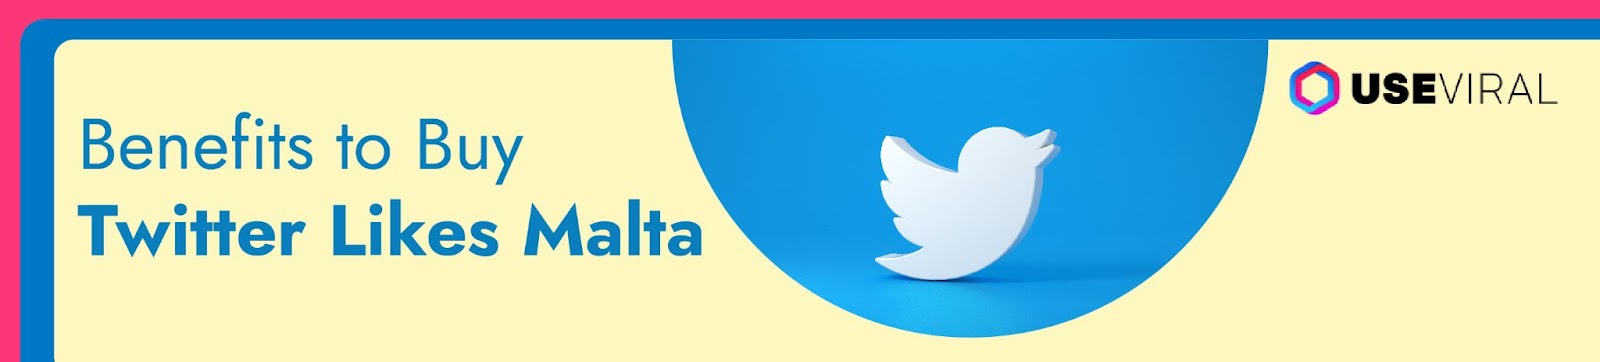 Benefits to Buy Twitter Likes Malta